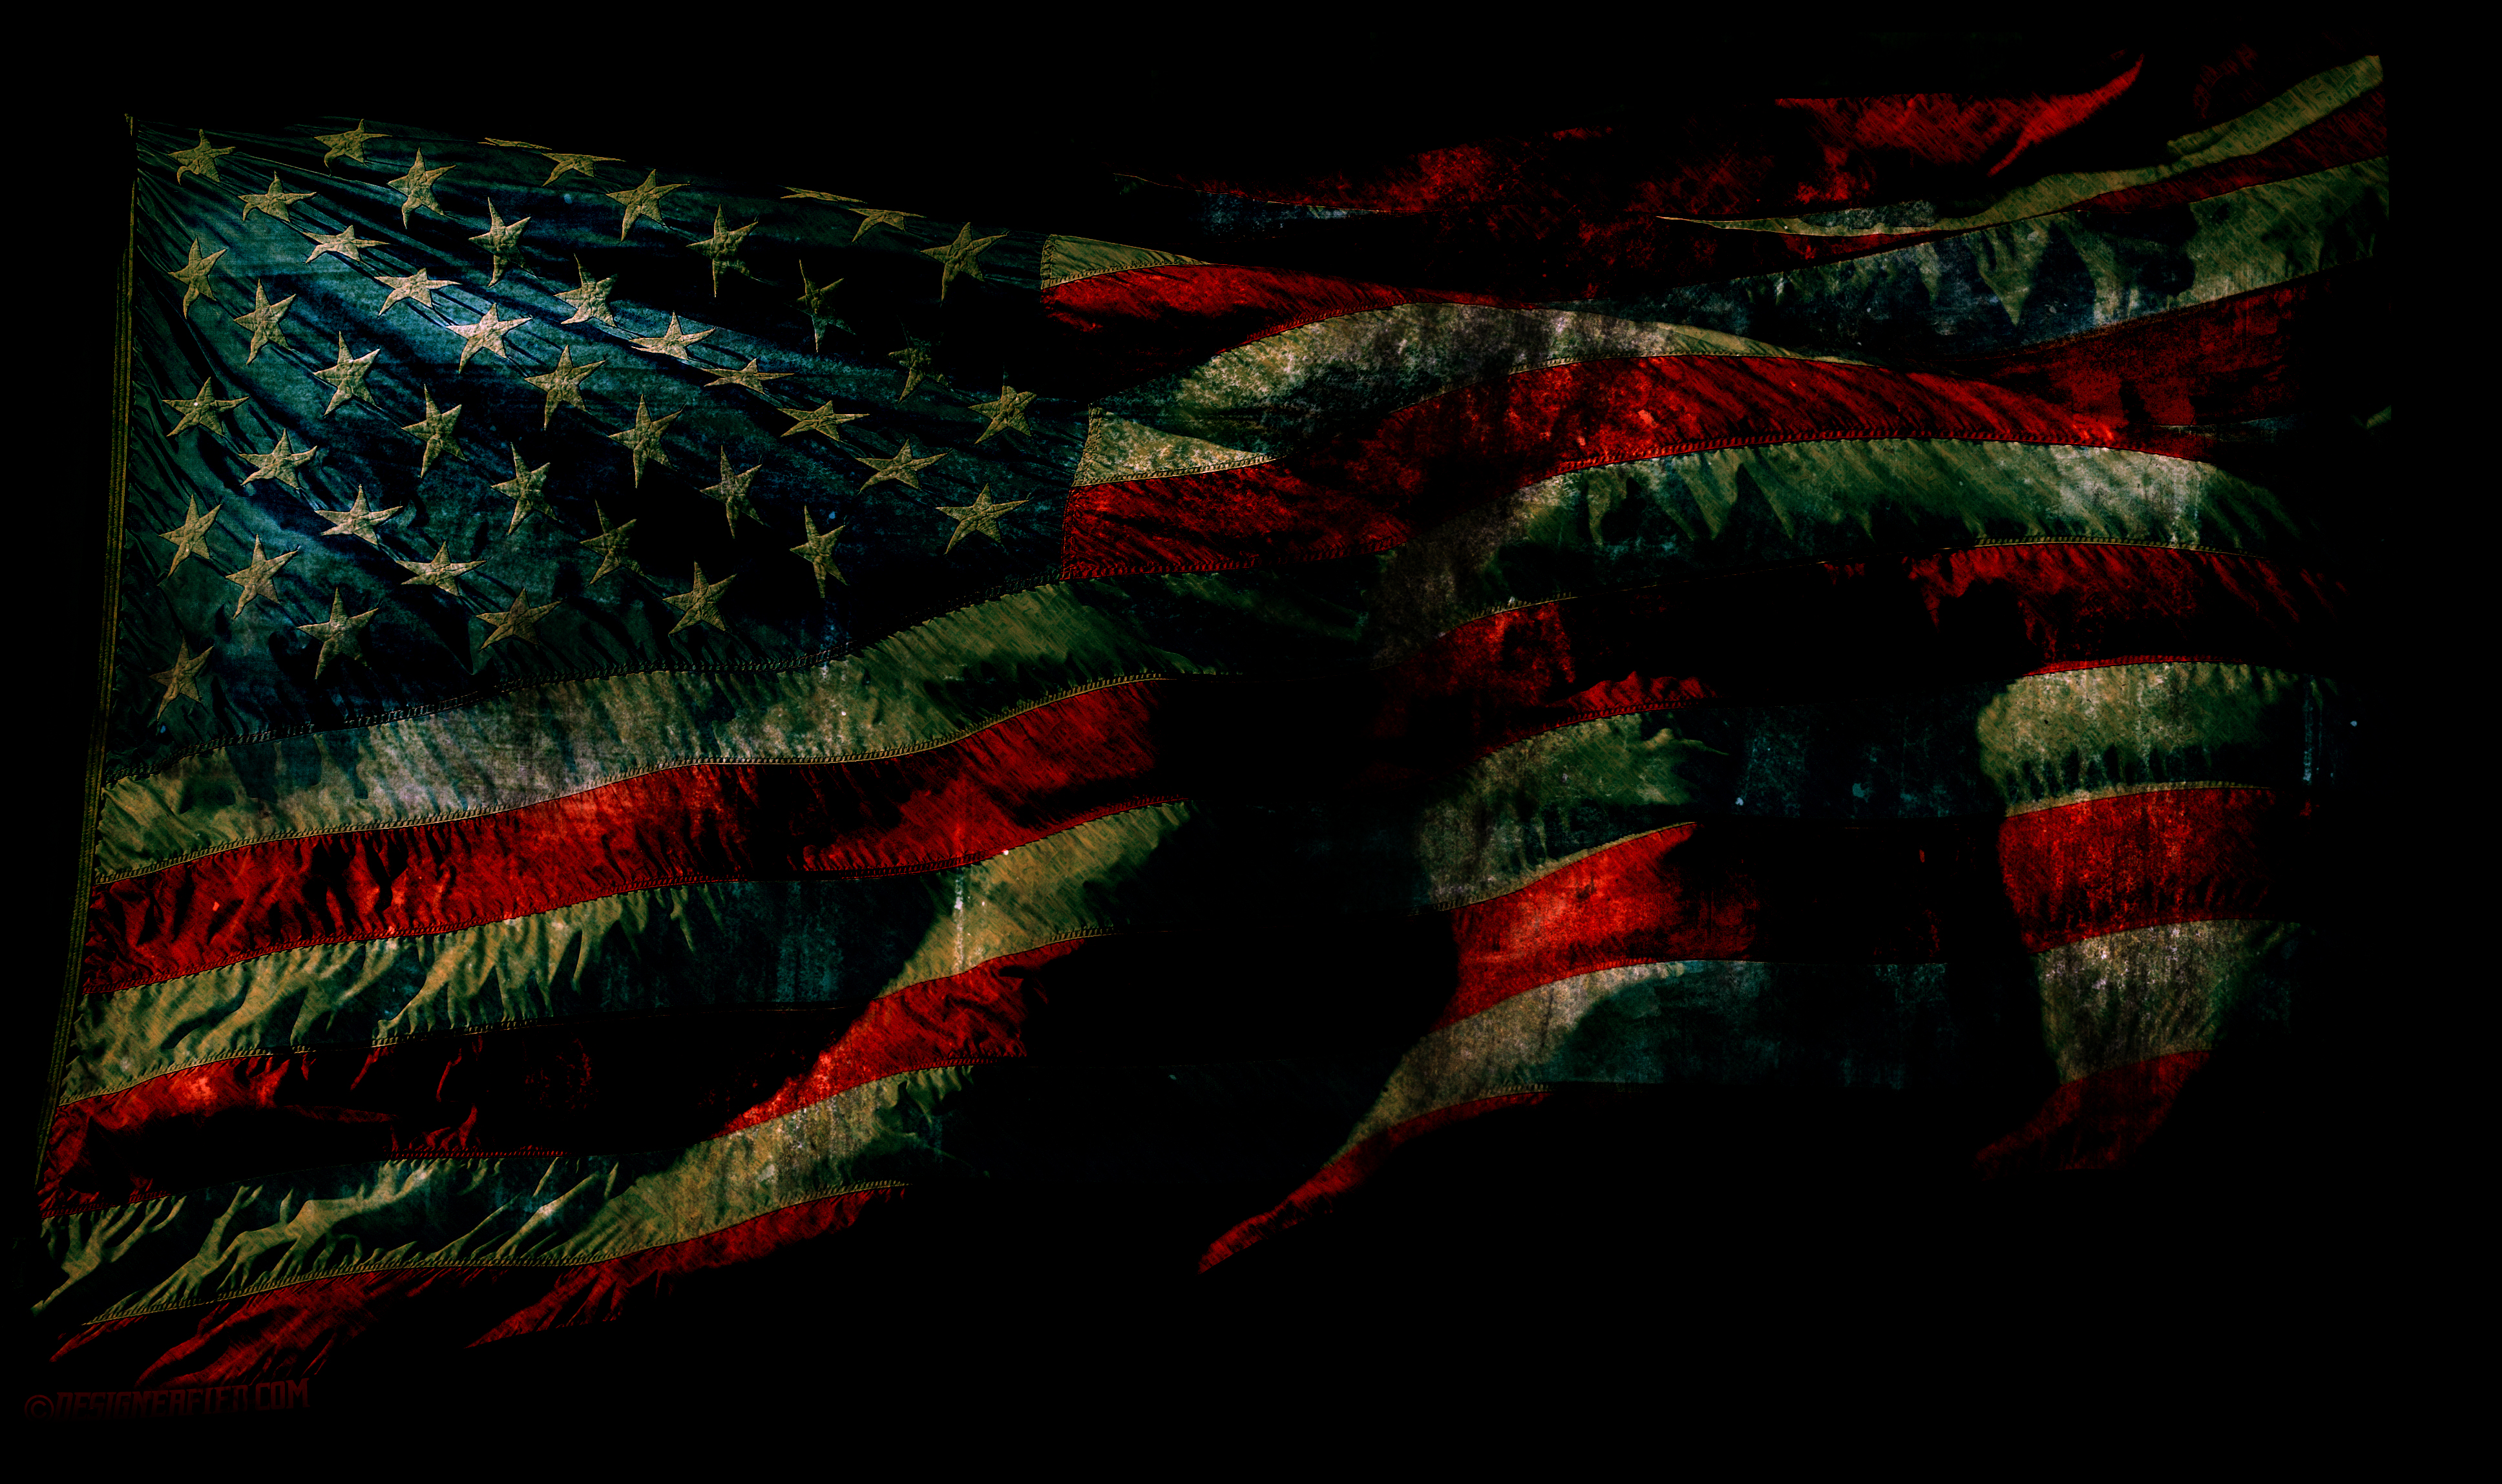 Cool american flag wallpaper